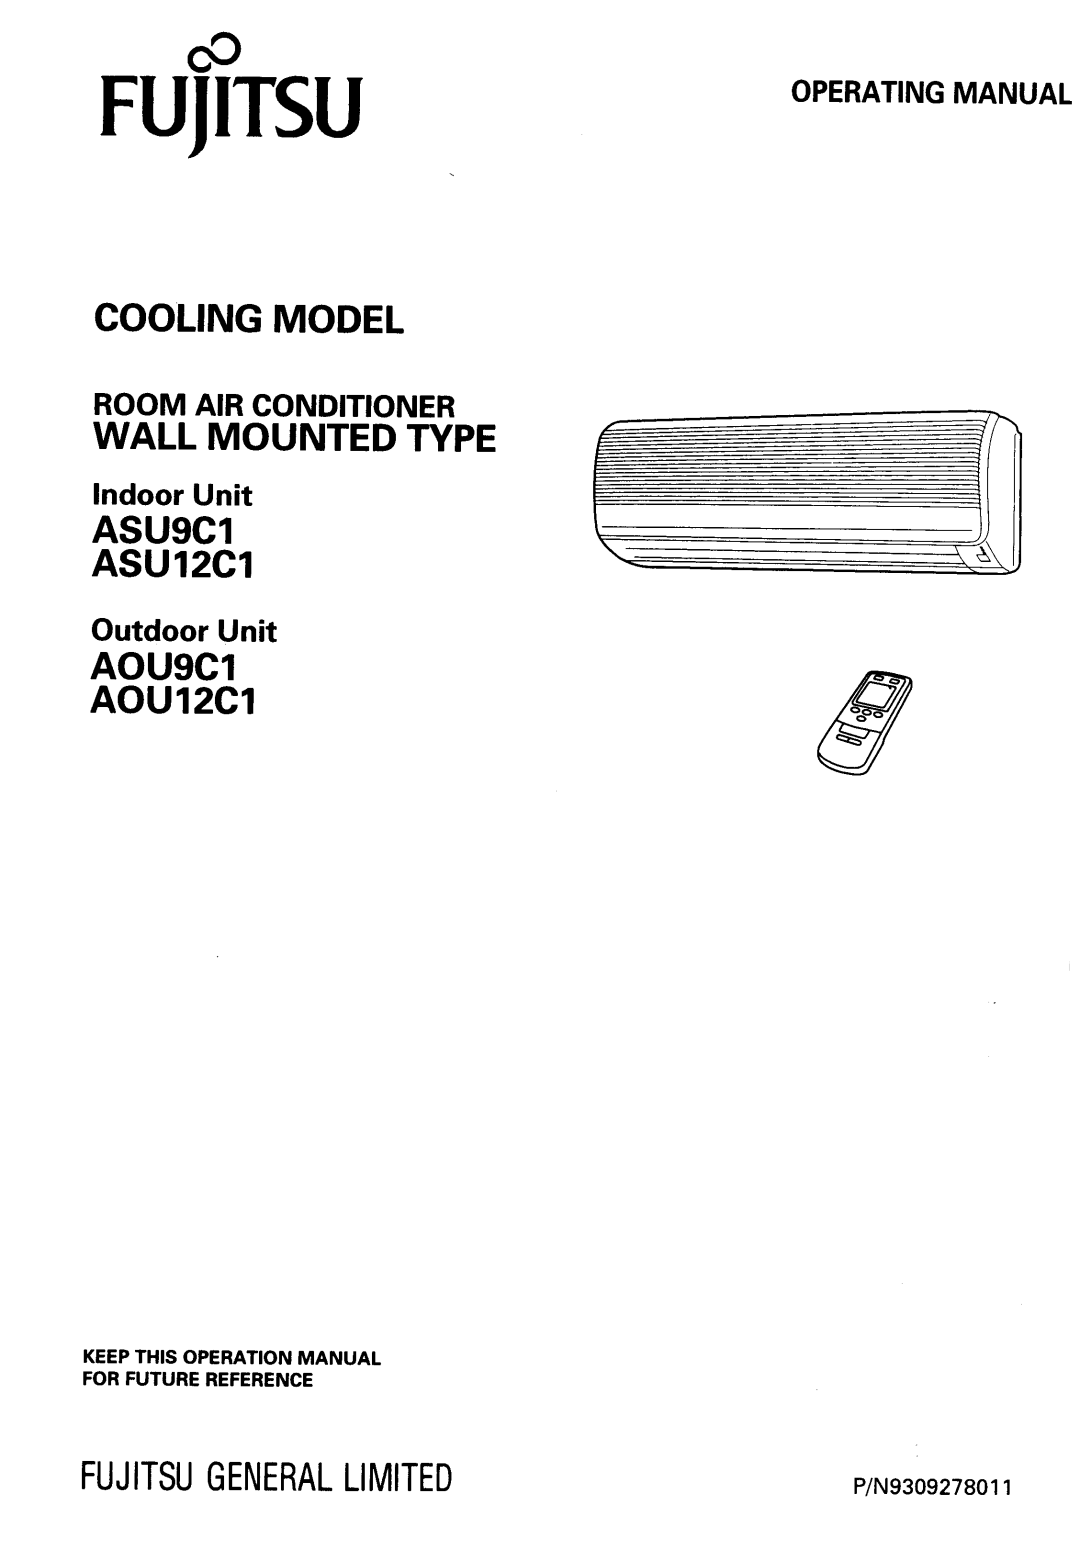 Fujitsu ASU12C1, ASU9C1, AOU9C1, AOU12C1, Cooling Model room air conditioner WALL MOUNTED TYPE manual 